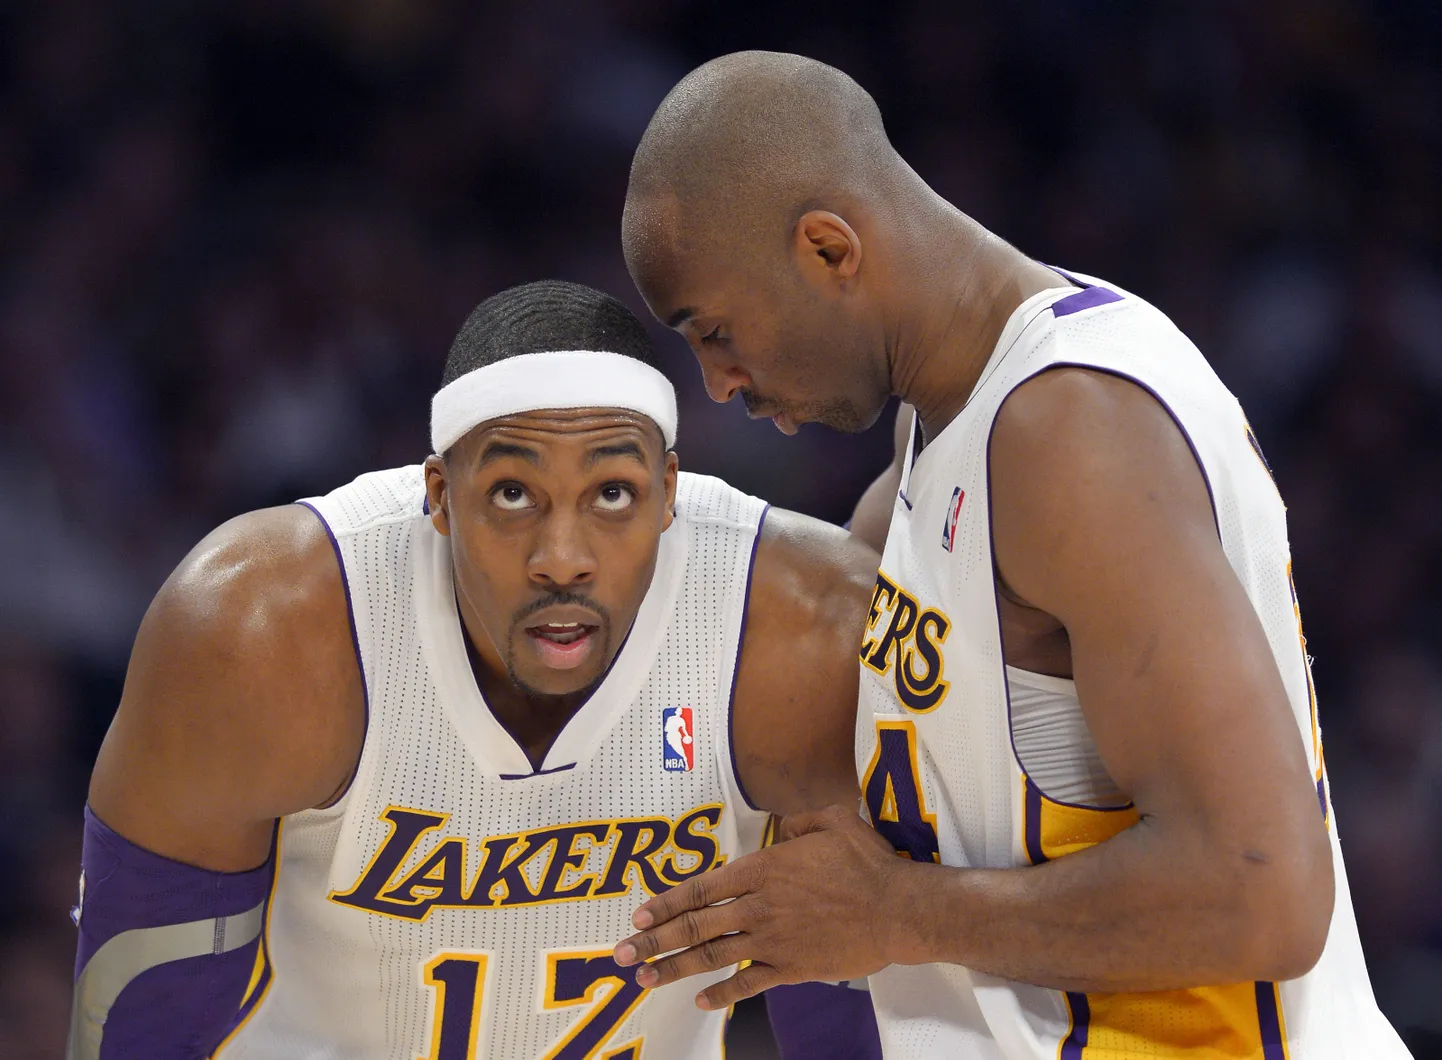 Kobe Bryant ja Dwight Howard vedasid Lakersi võidule.